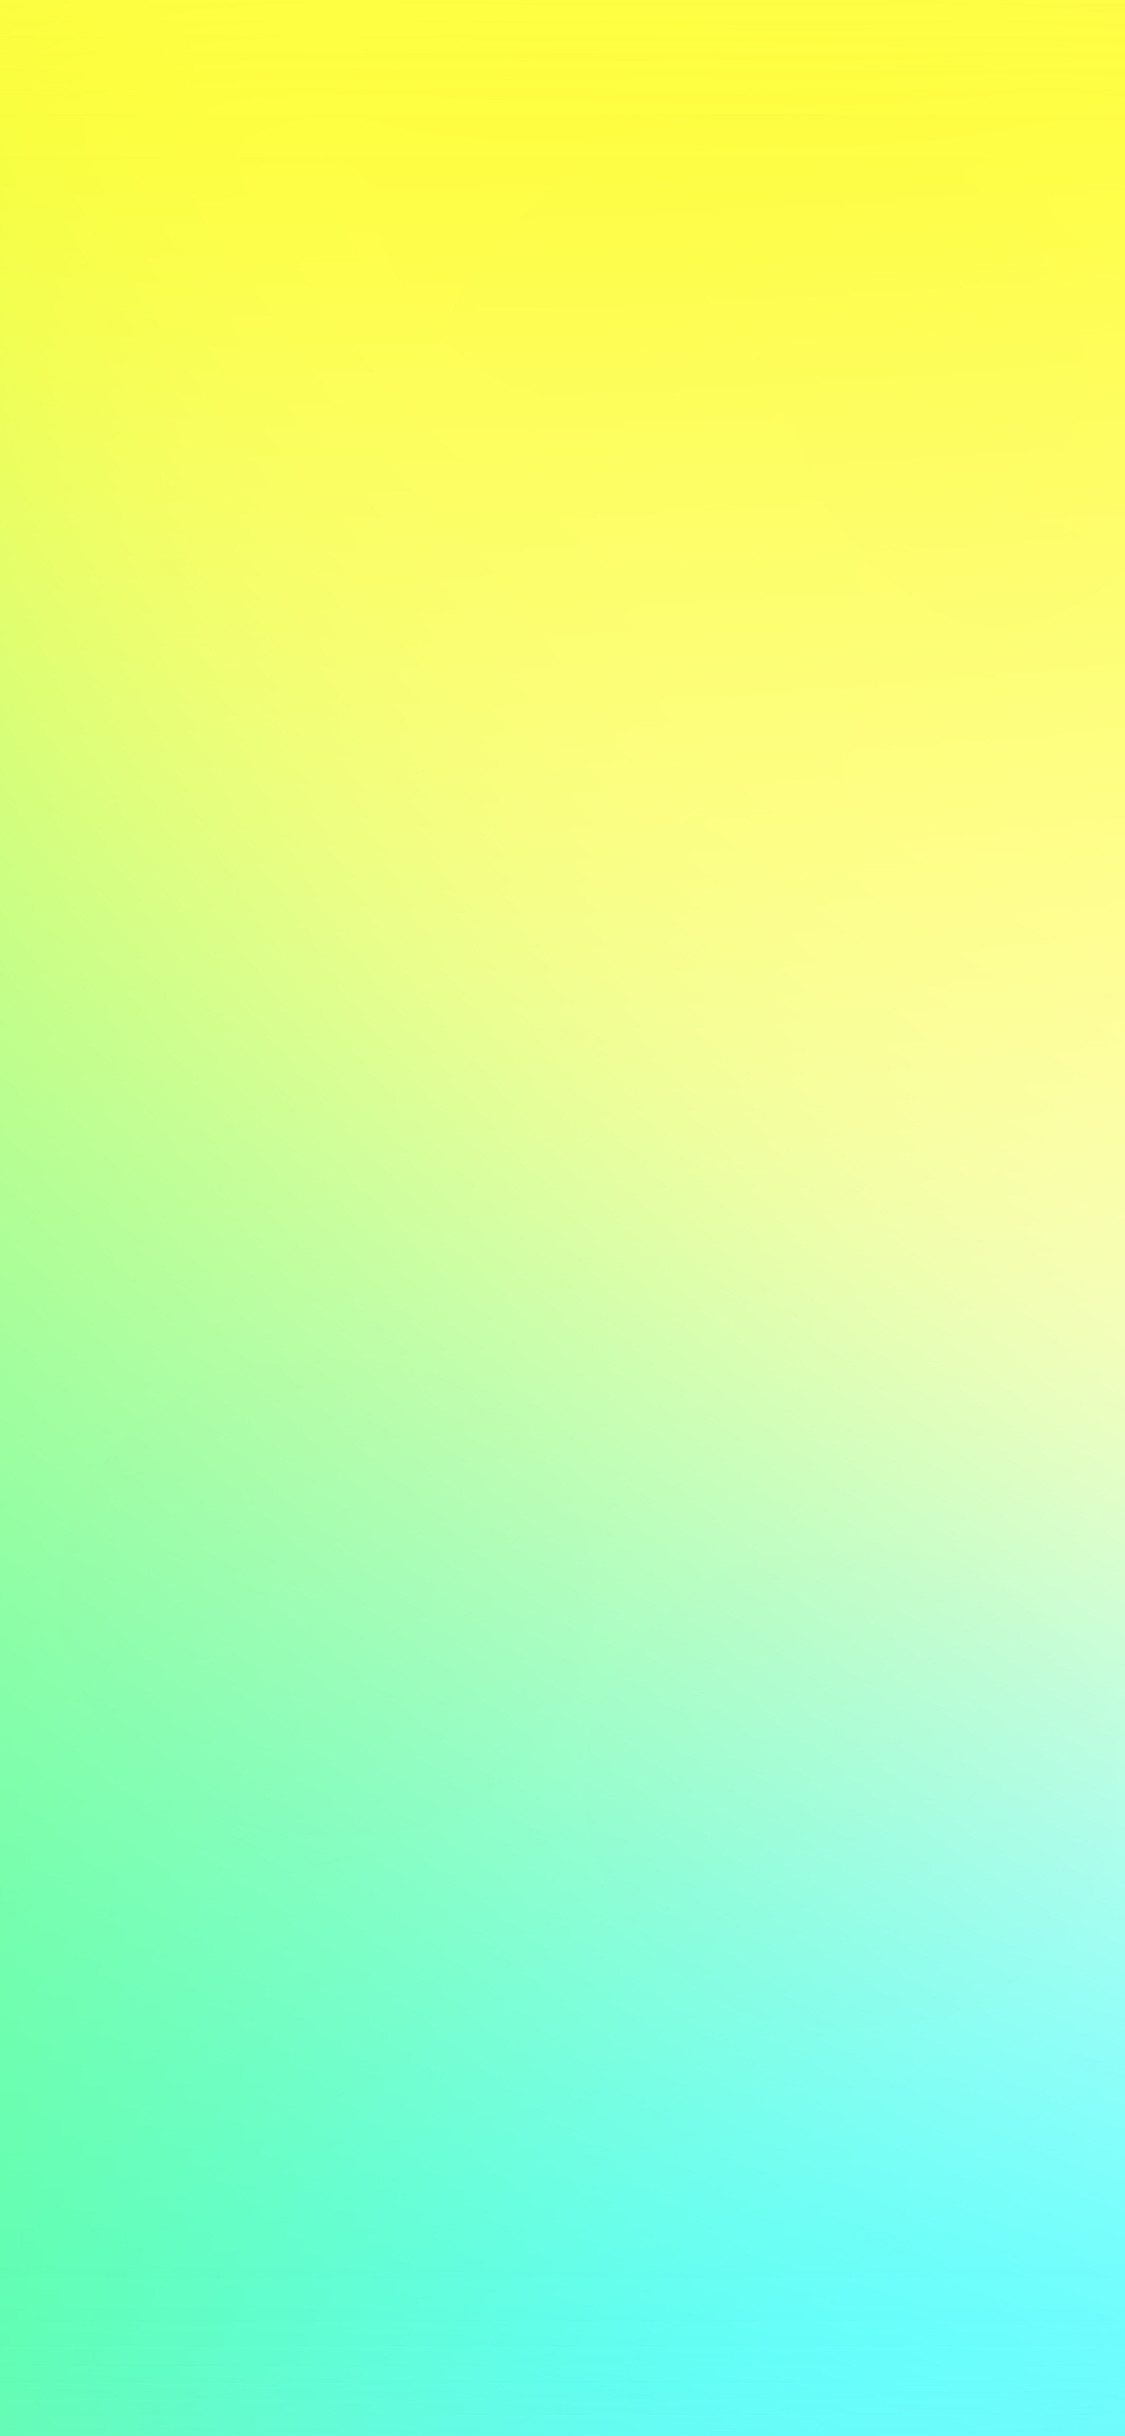 1125x2436 sg85-bright-yellow-neon-green-sunny-gradation-blur